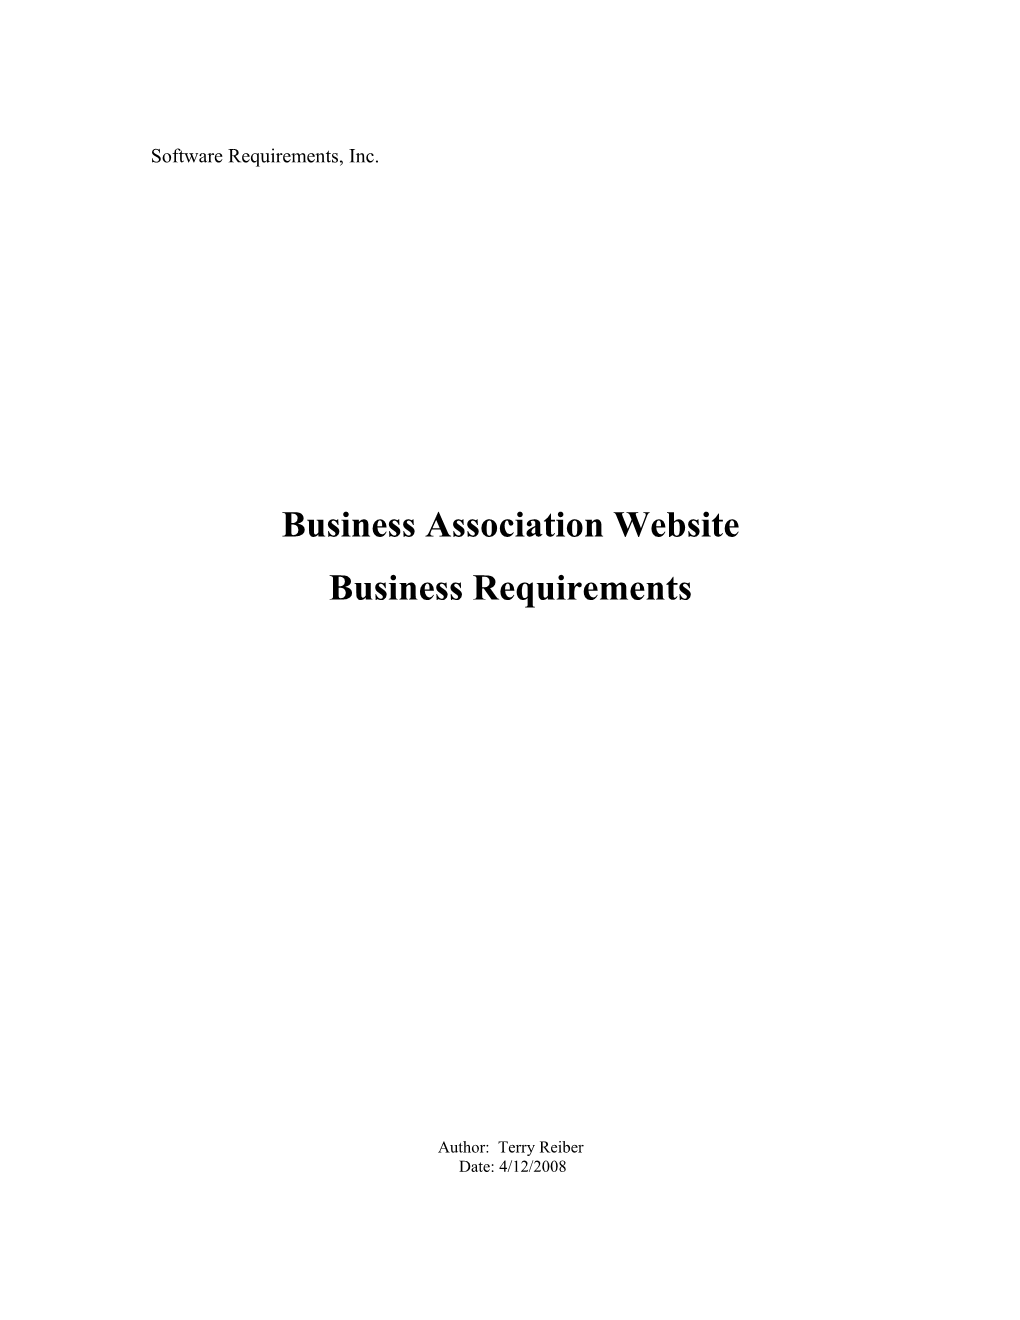 Business Association Website - Business Requirements Document